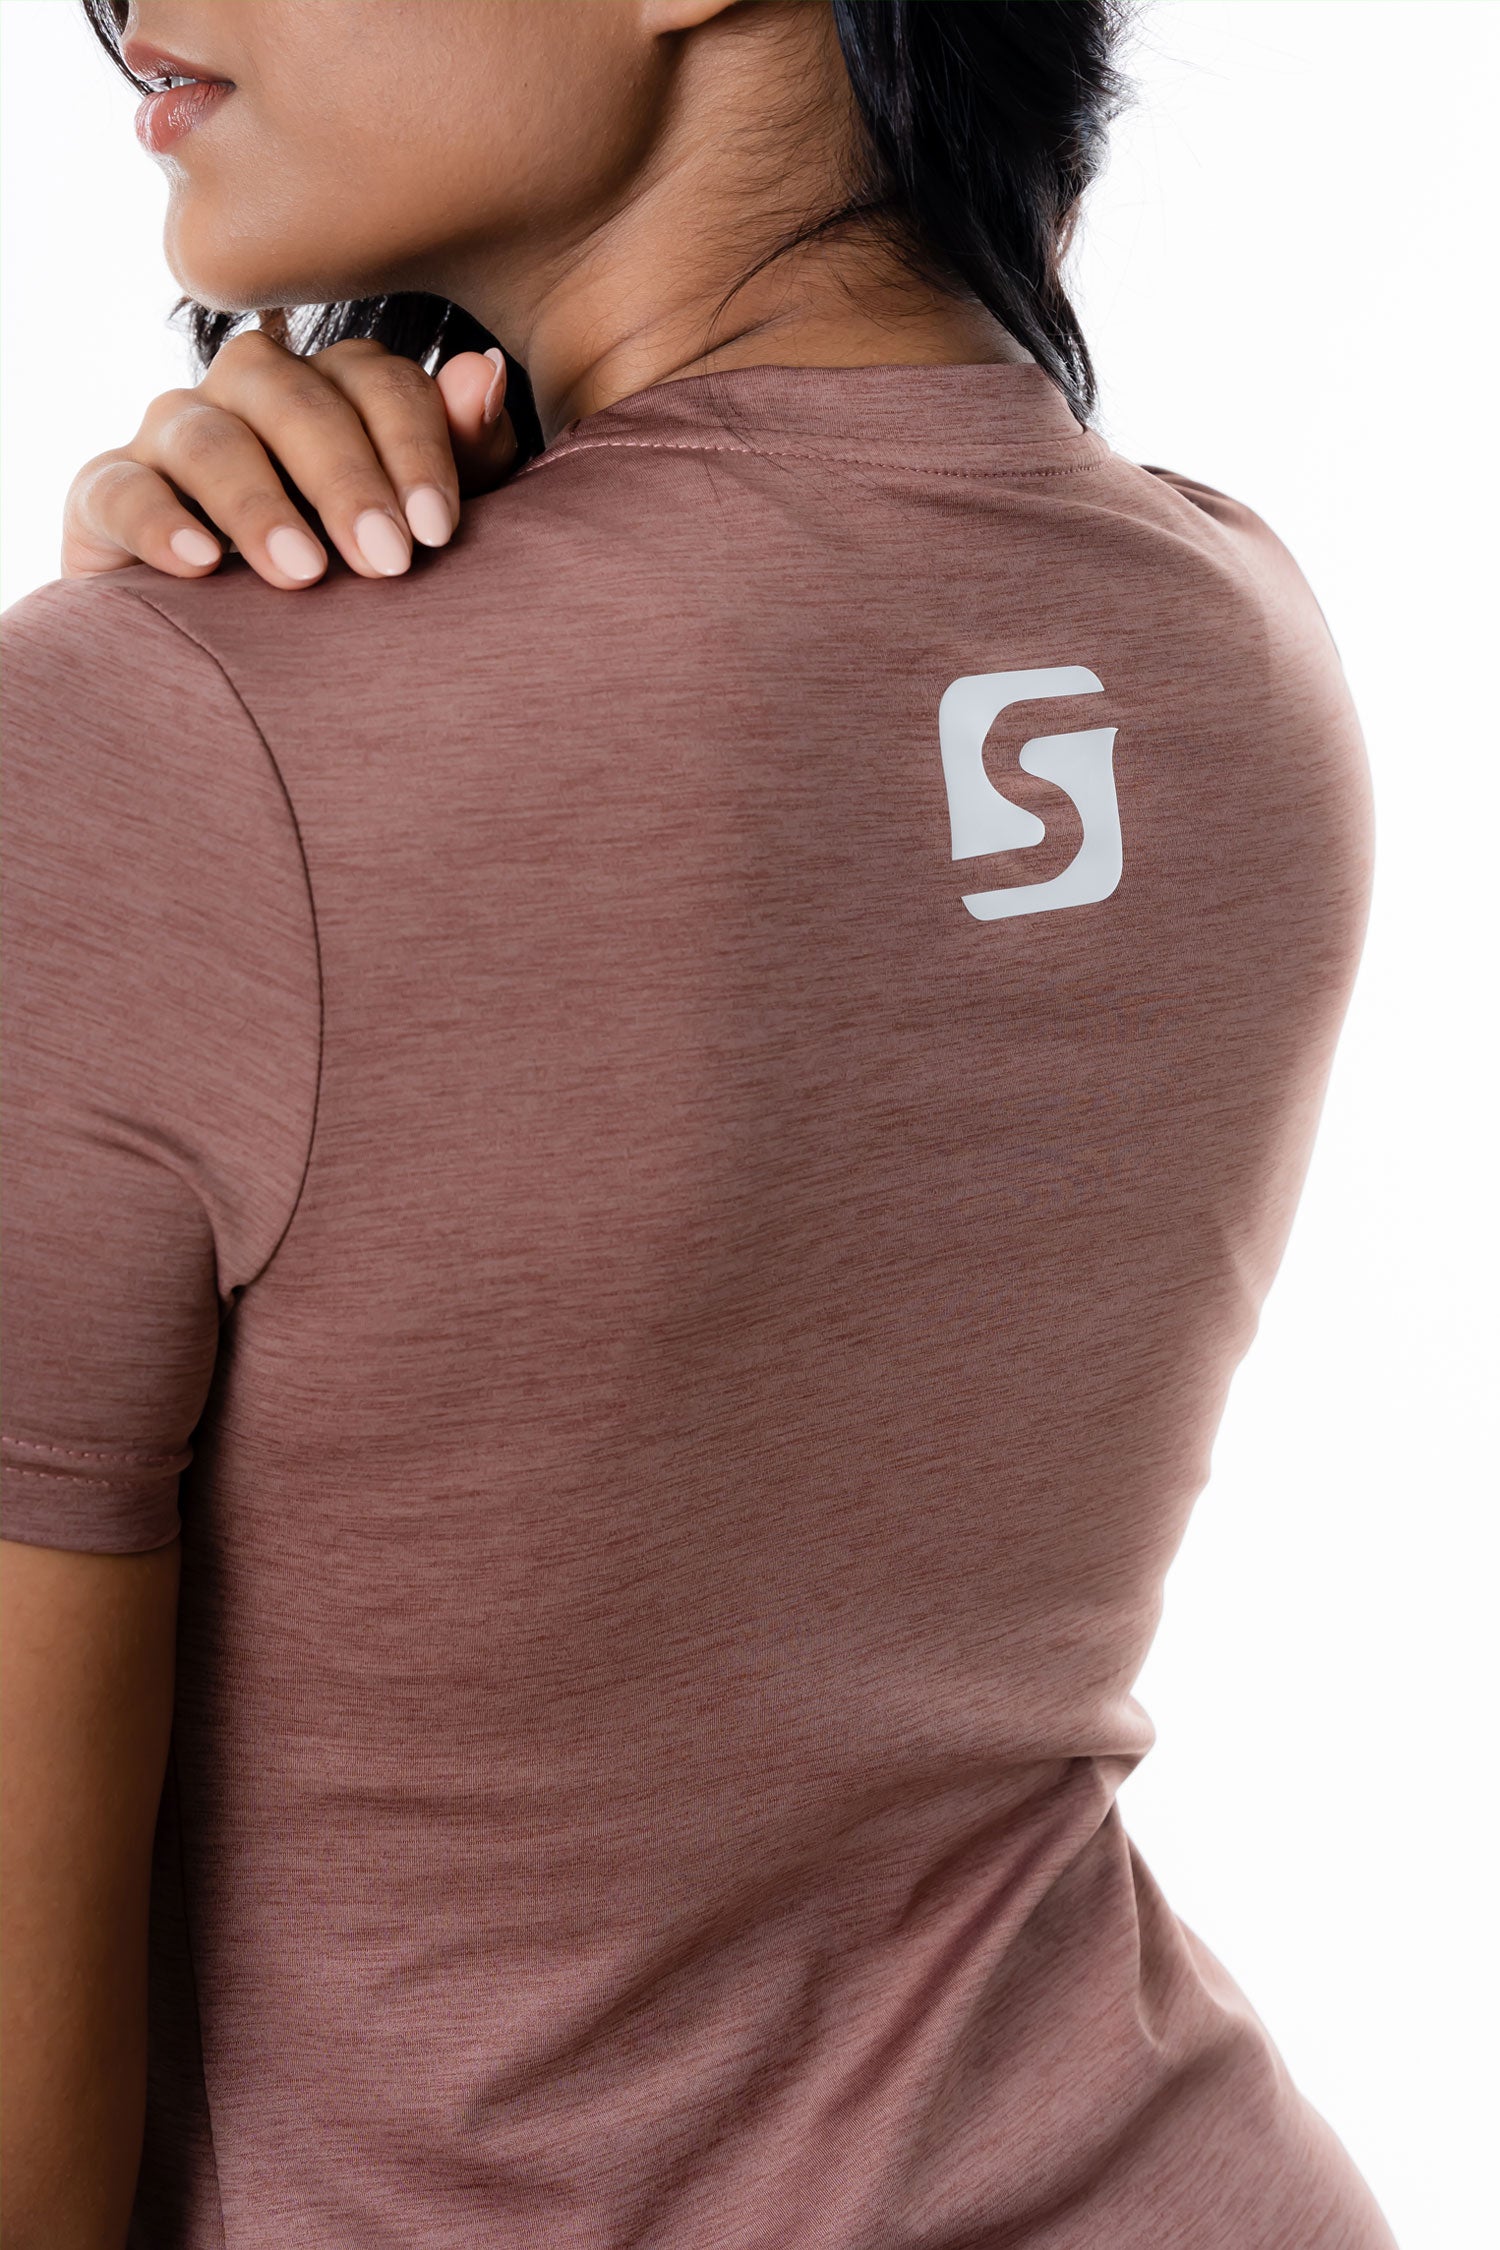 Womens Performance T-Shirt | Societies Clothing Sri Lanka | Activewear | Gym Clothes | Gym Wear | Gym Comfort Wear 